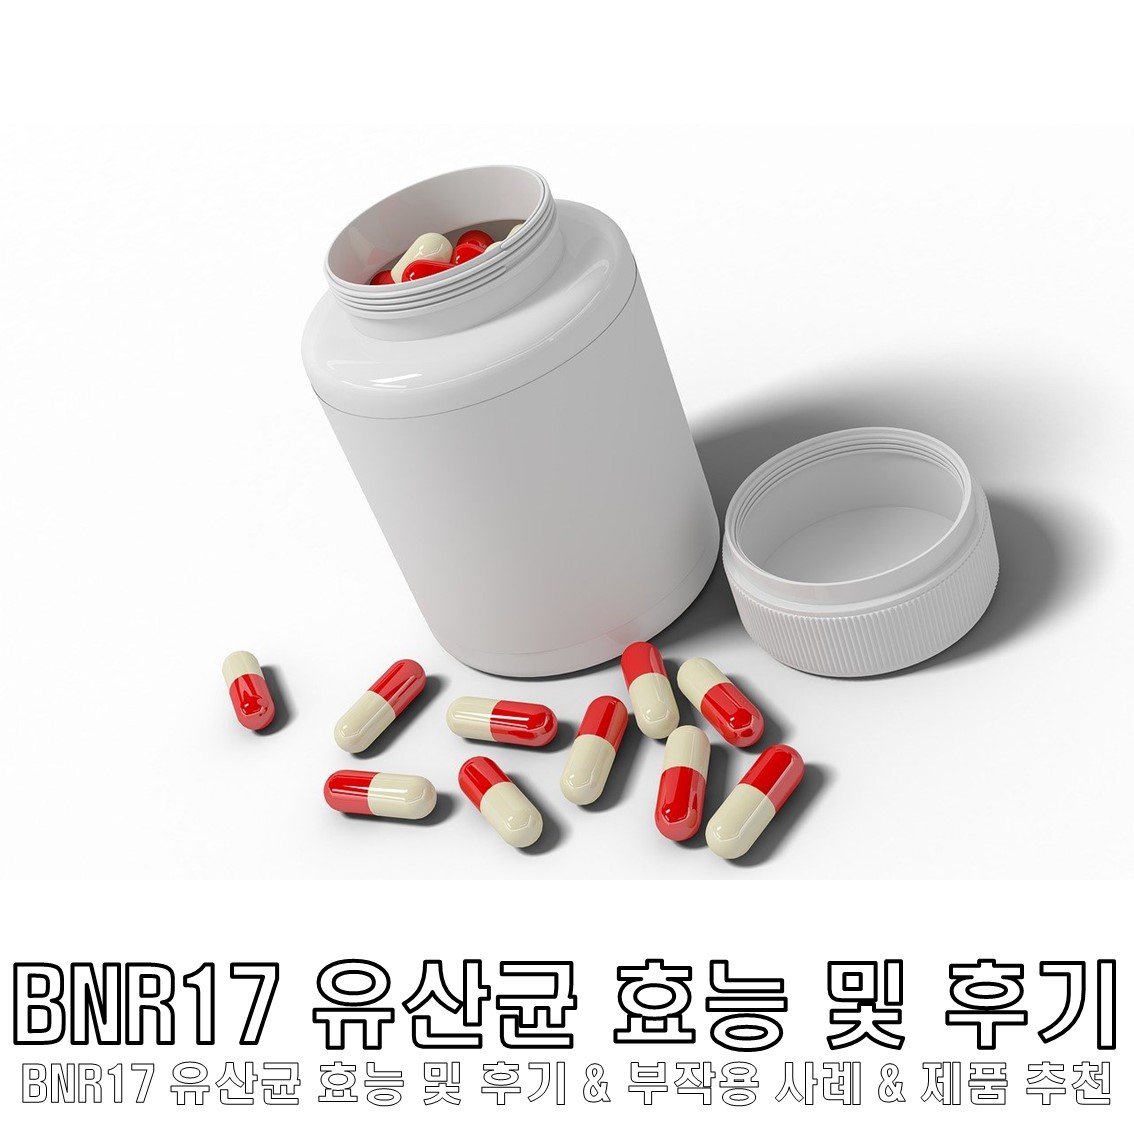 BNR17 유산균 효능 및 부작용 & 후기 및 제품 추천 (비엔나17, 비에날17)